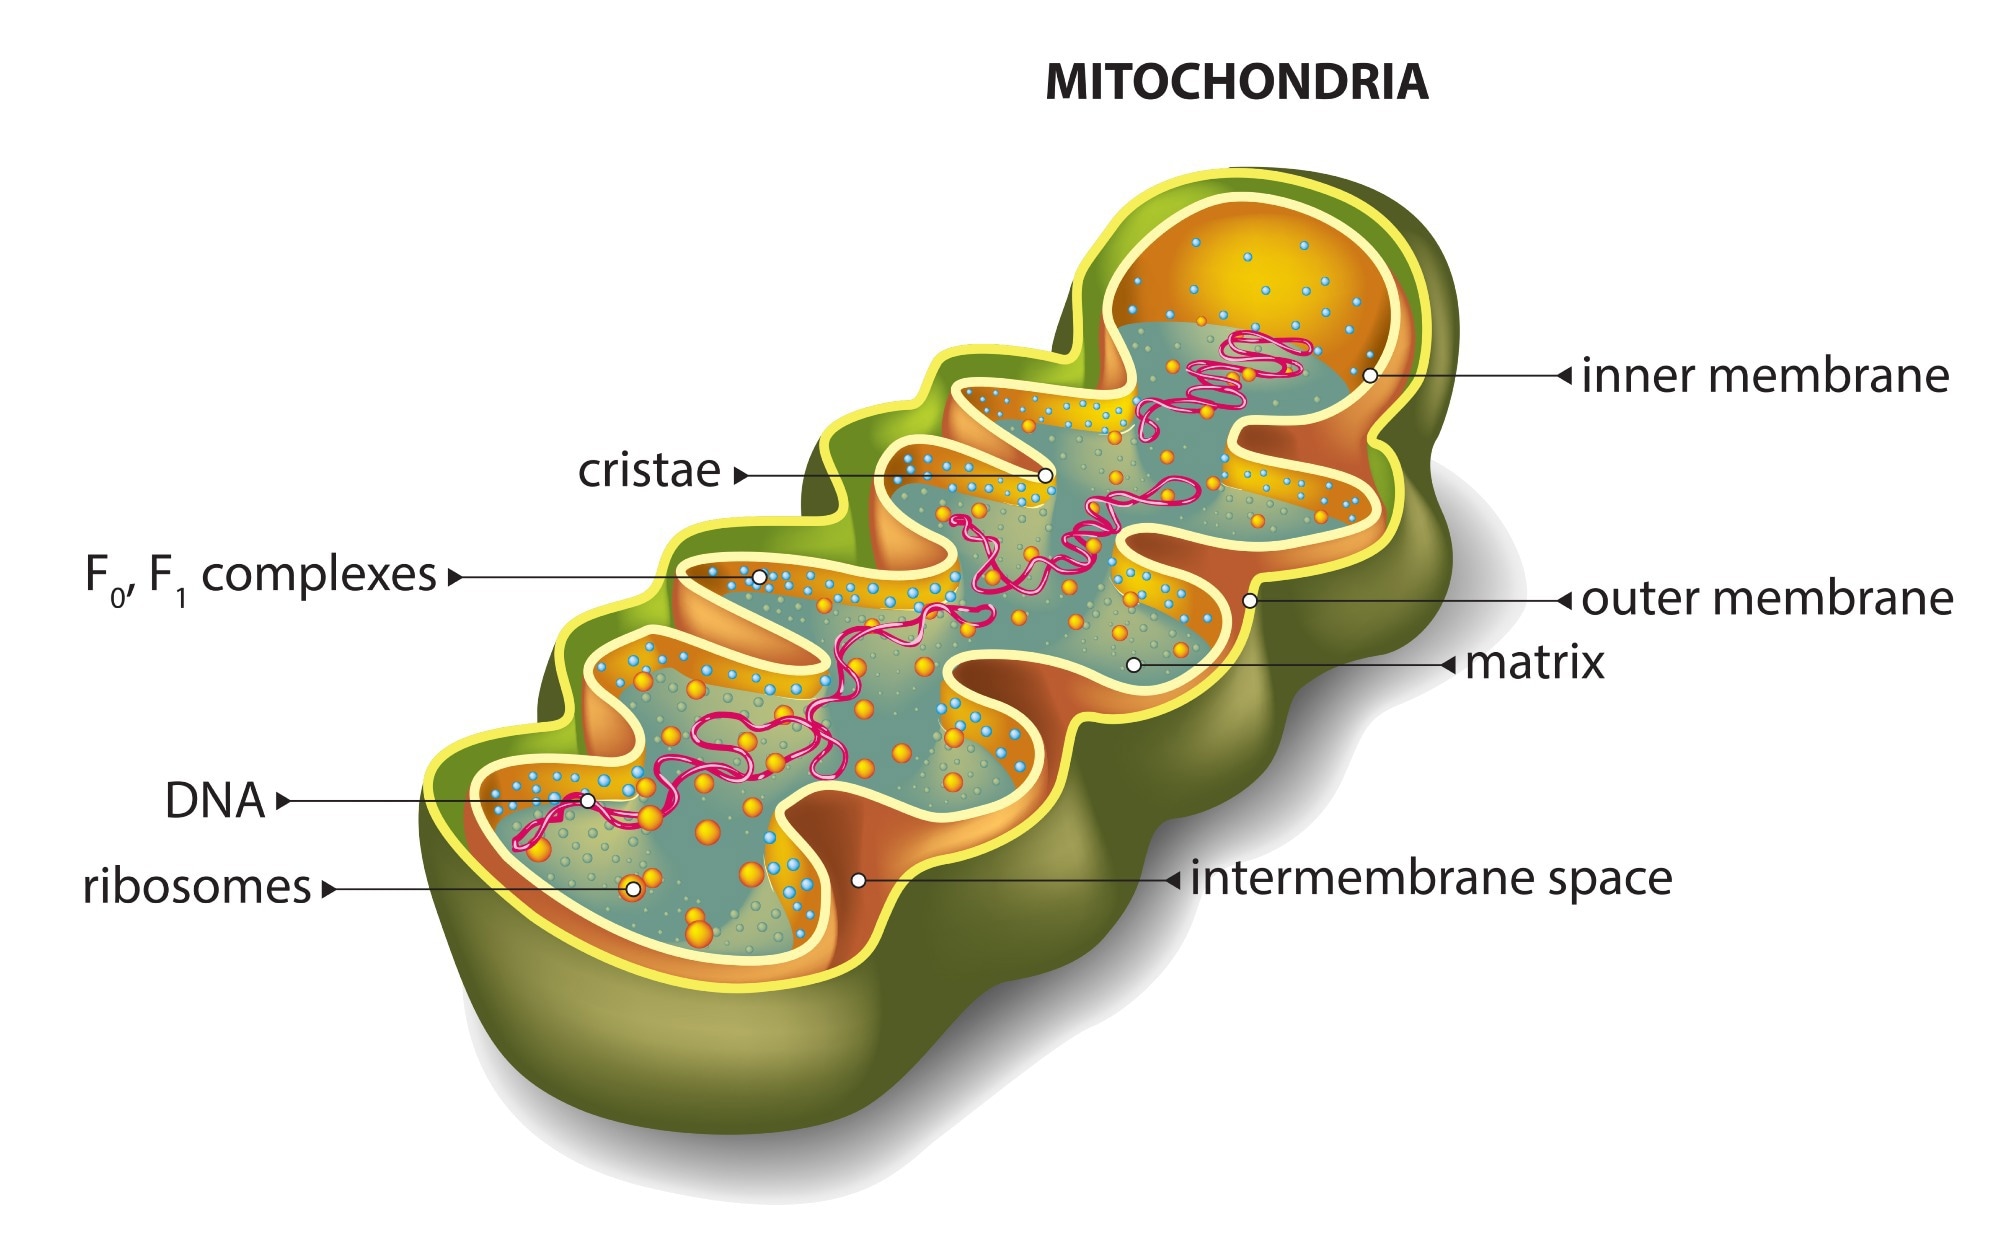 Section of mitochondria. Image Credit: EreborMountain/Shutterstock.com